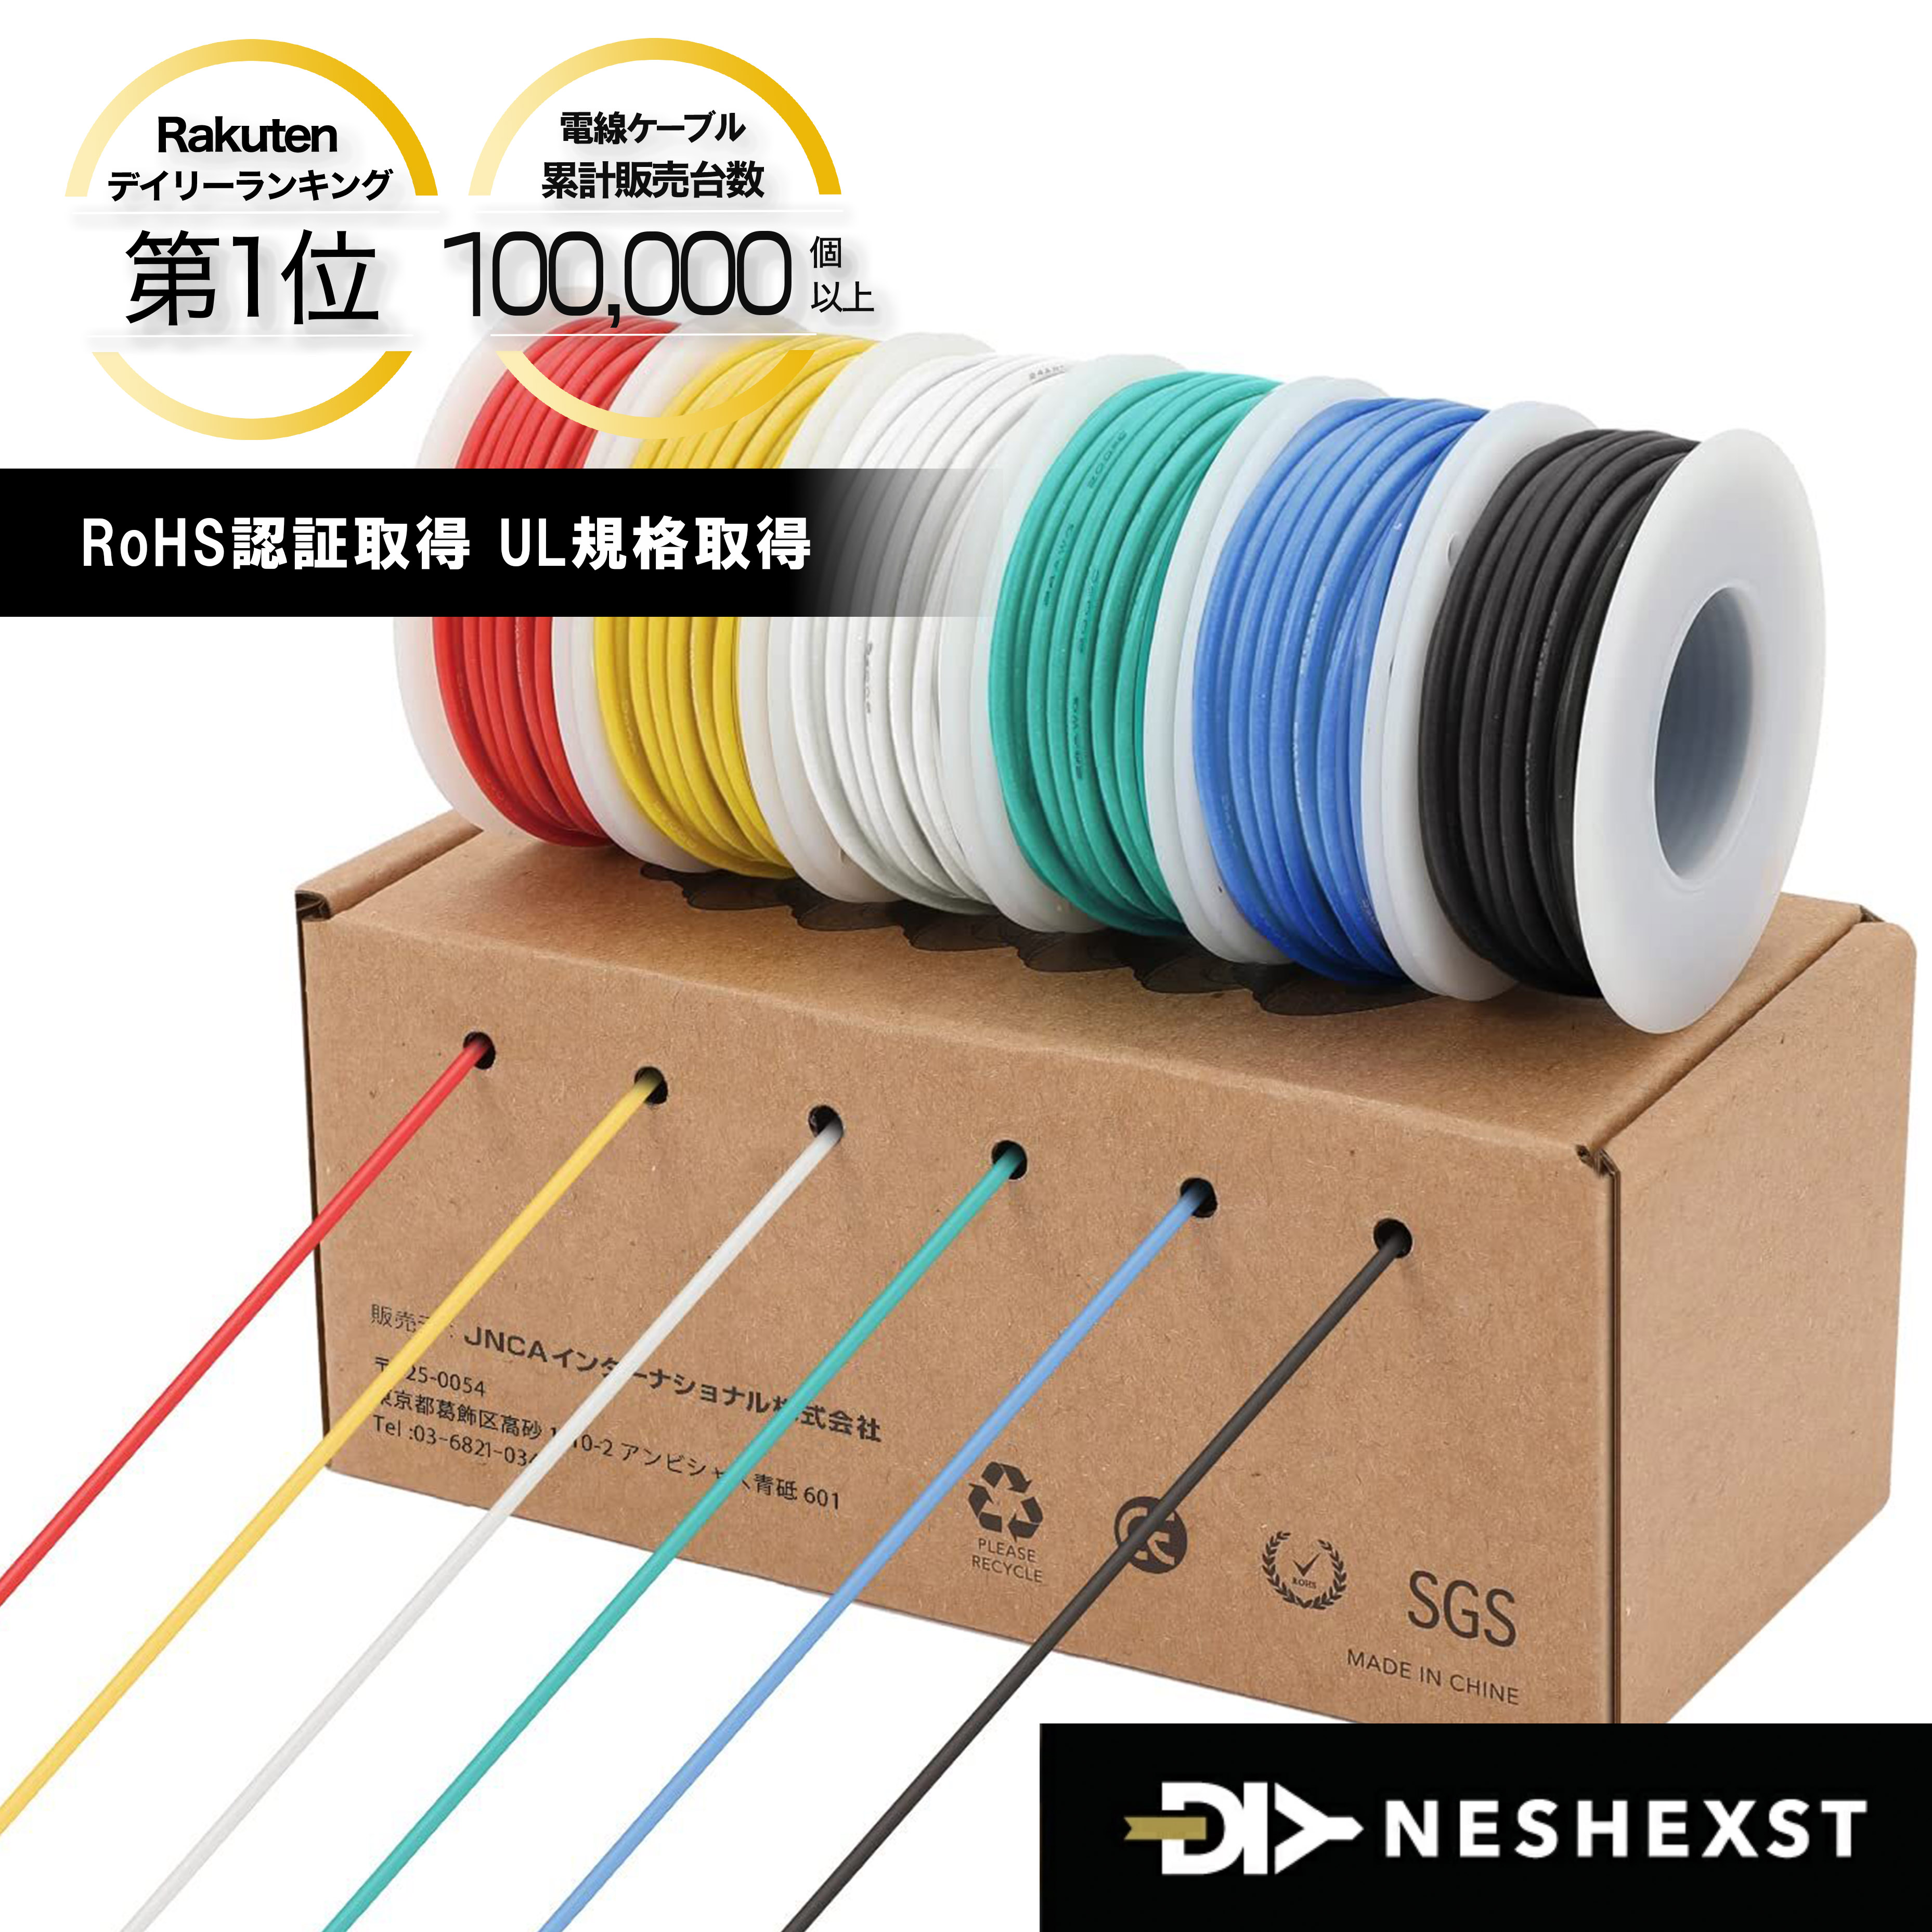 NESHEXST(ネセクト) 電線ケーブル 銅線 配線コード 耐熱ビニル 絶縁電線 シリコンワイヤー 同軸ケーブル 6色 長さ9m より線